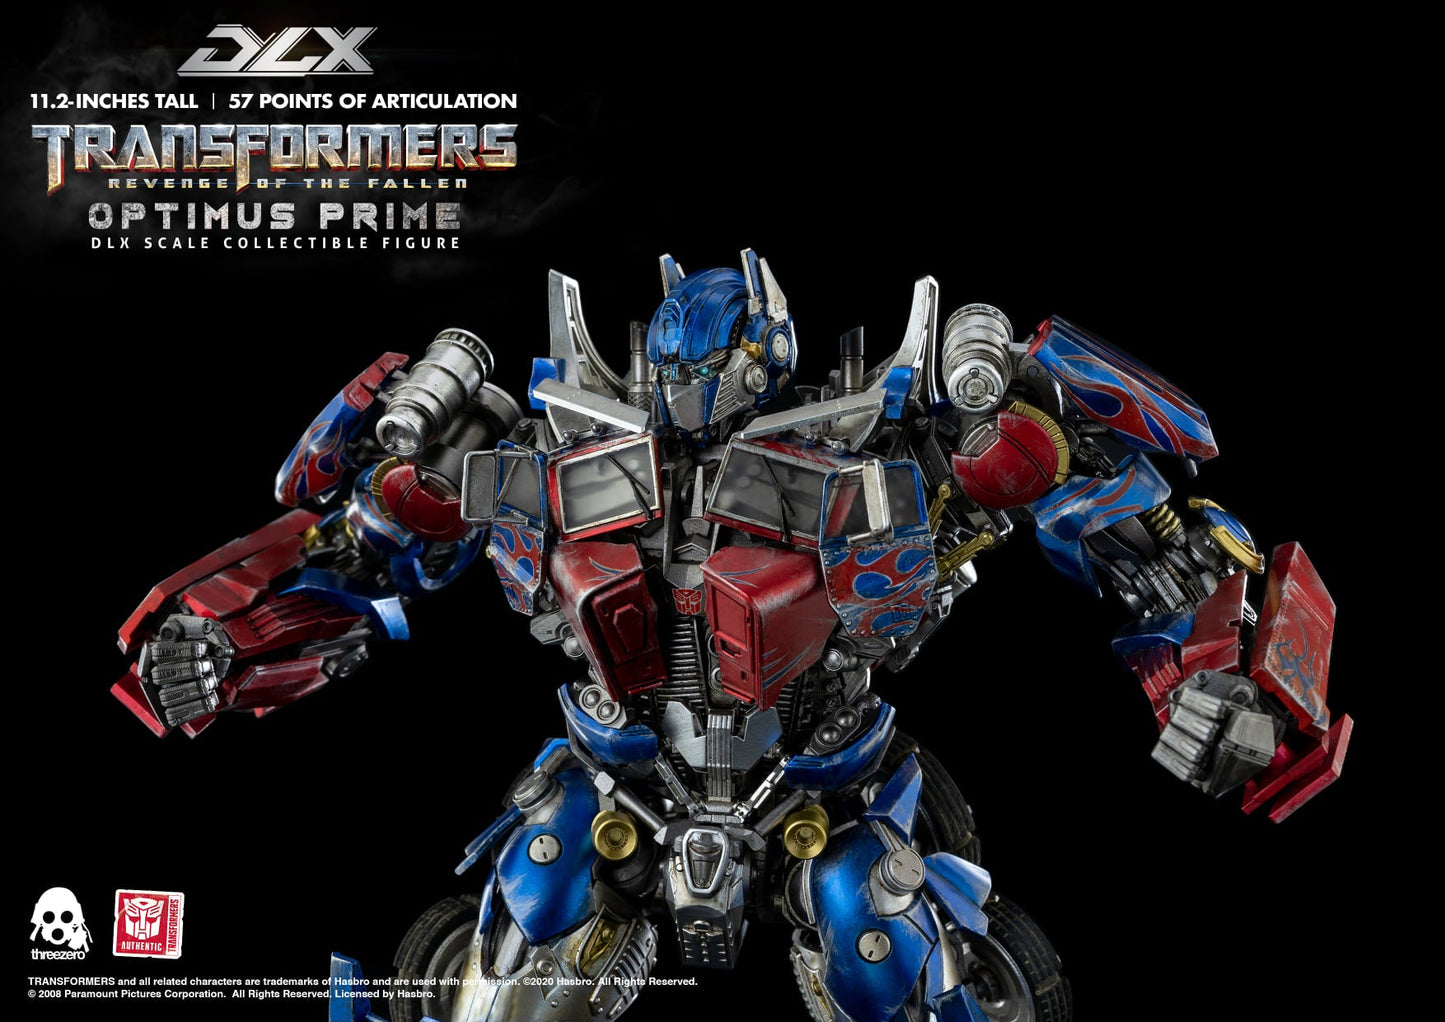 Pedido Figura DLX Optimus Prime - Transformers: Revenge of the Fallen marca Threezero 3Z0163 escala (28.4 cm)